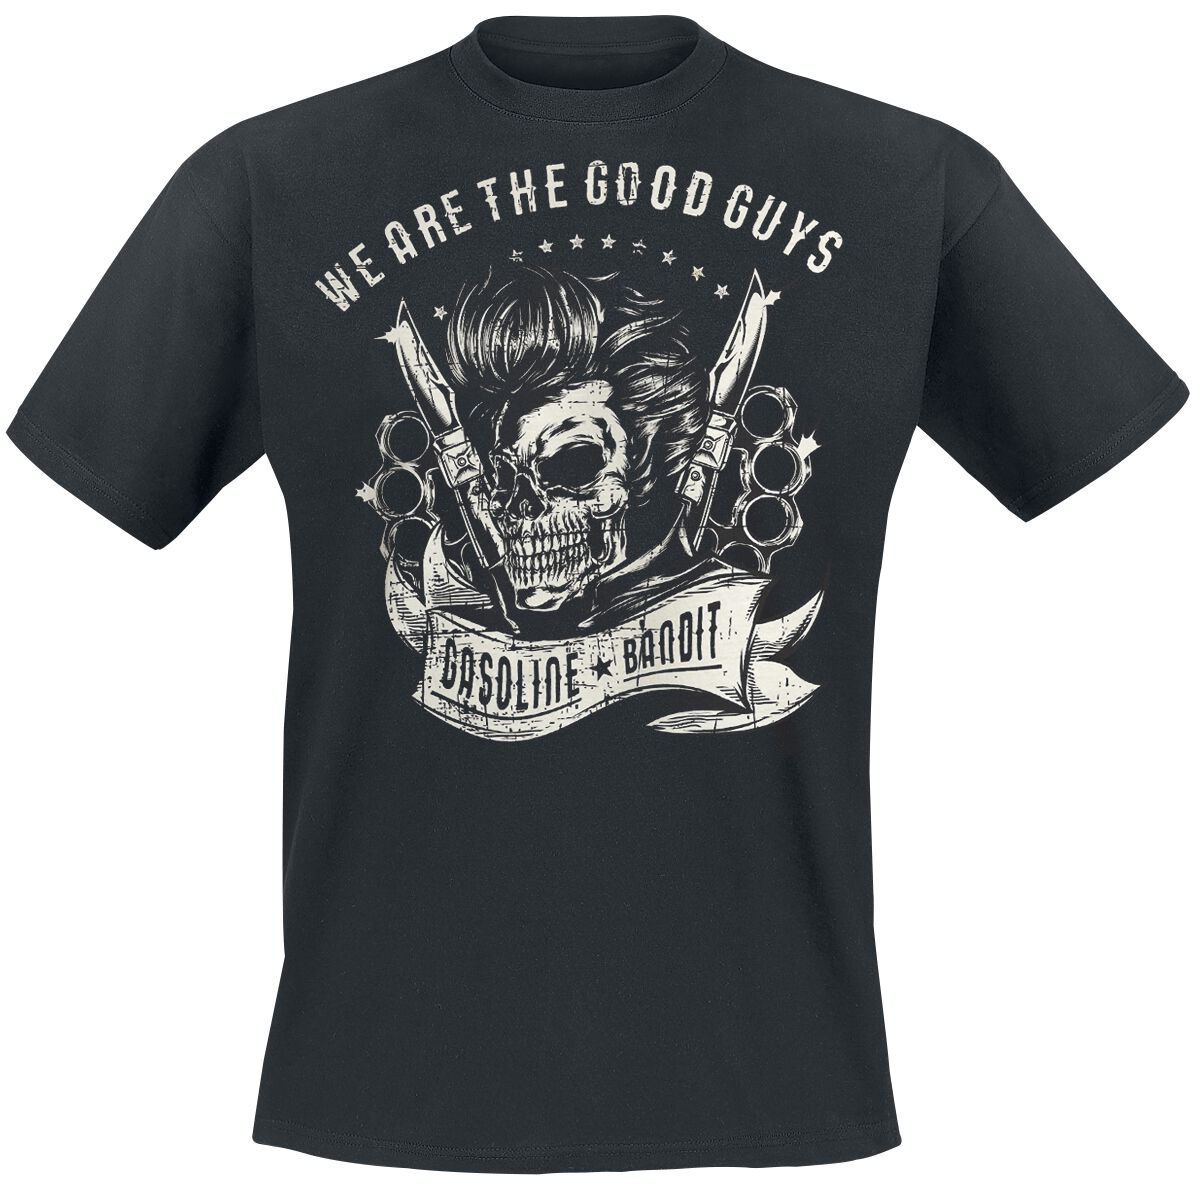 We The Good Guys | Gasoline Bandit T-shirt |